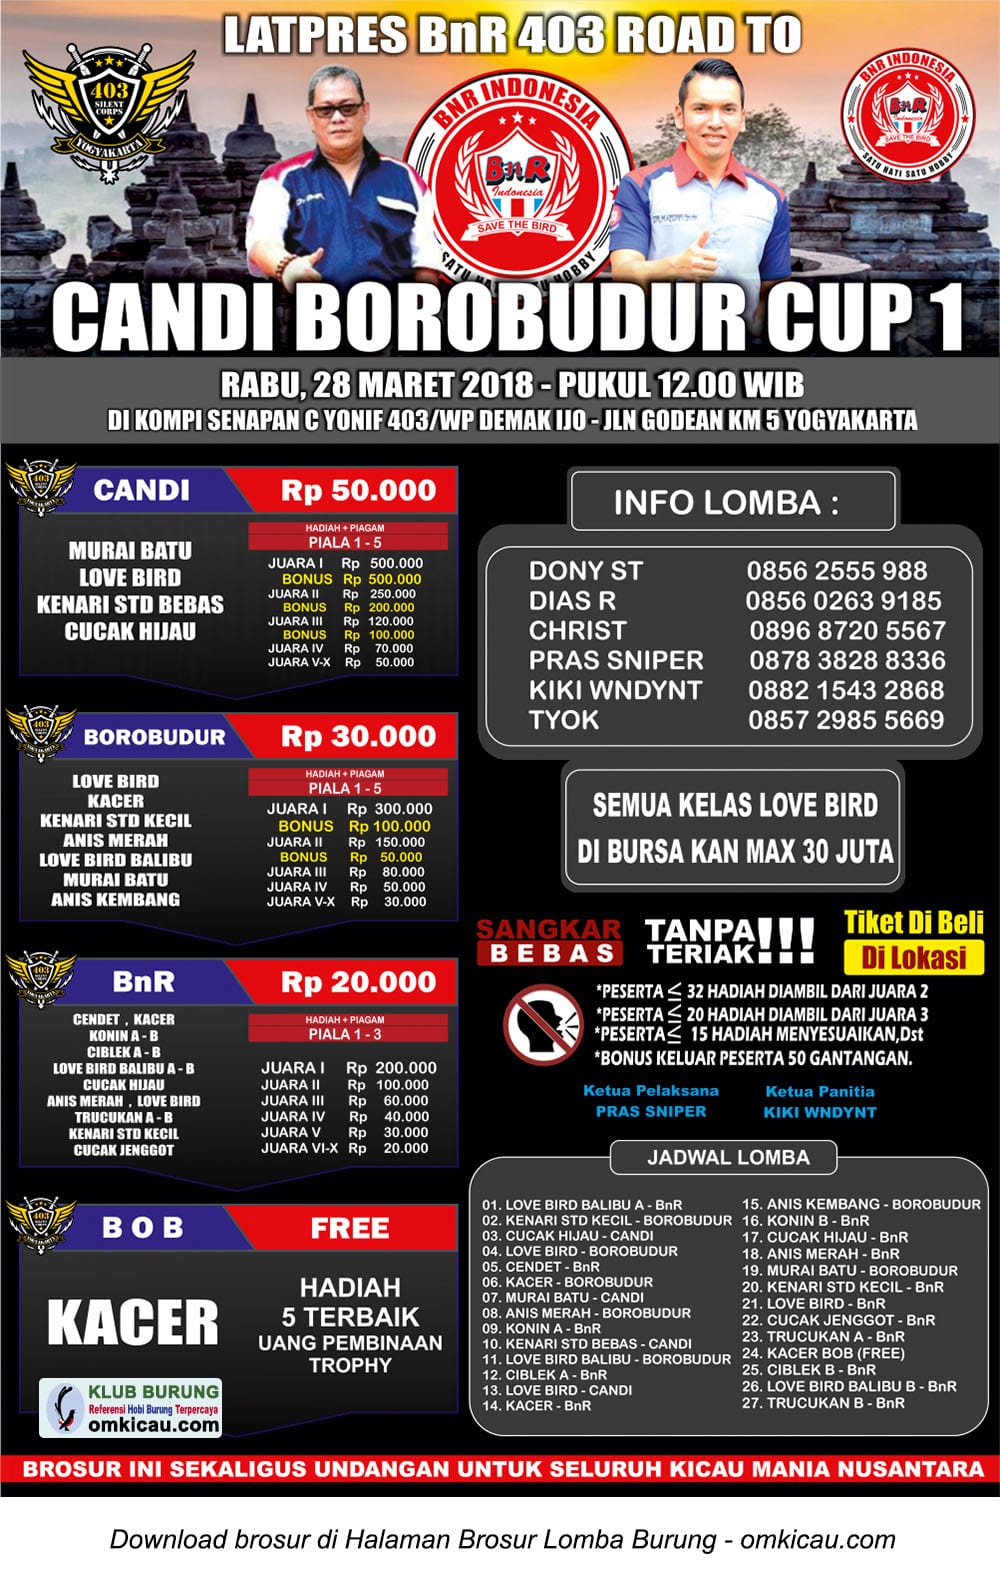 Latpres Road to Candi Borobudur Cup 1